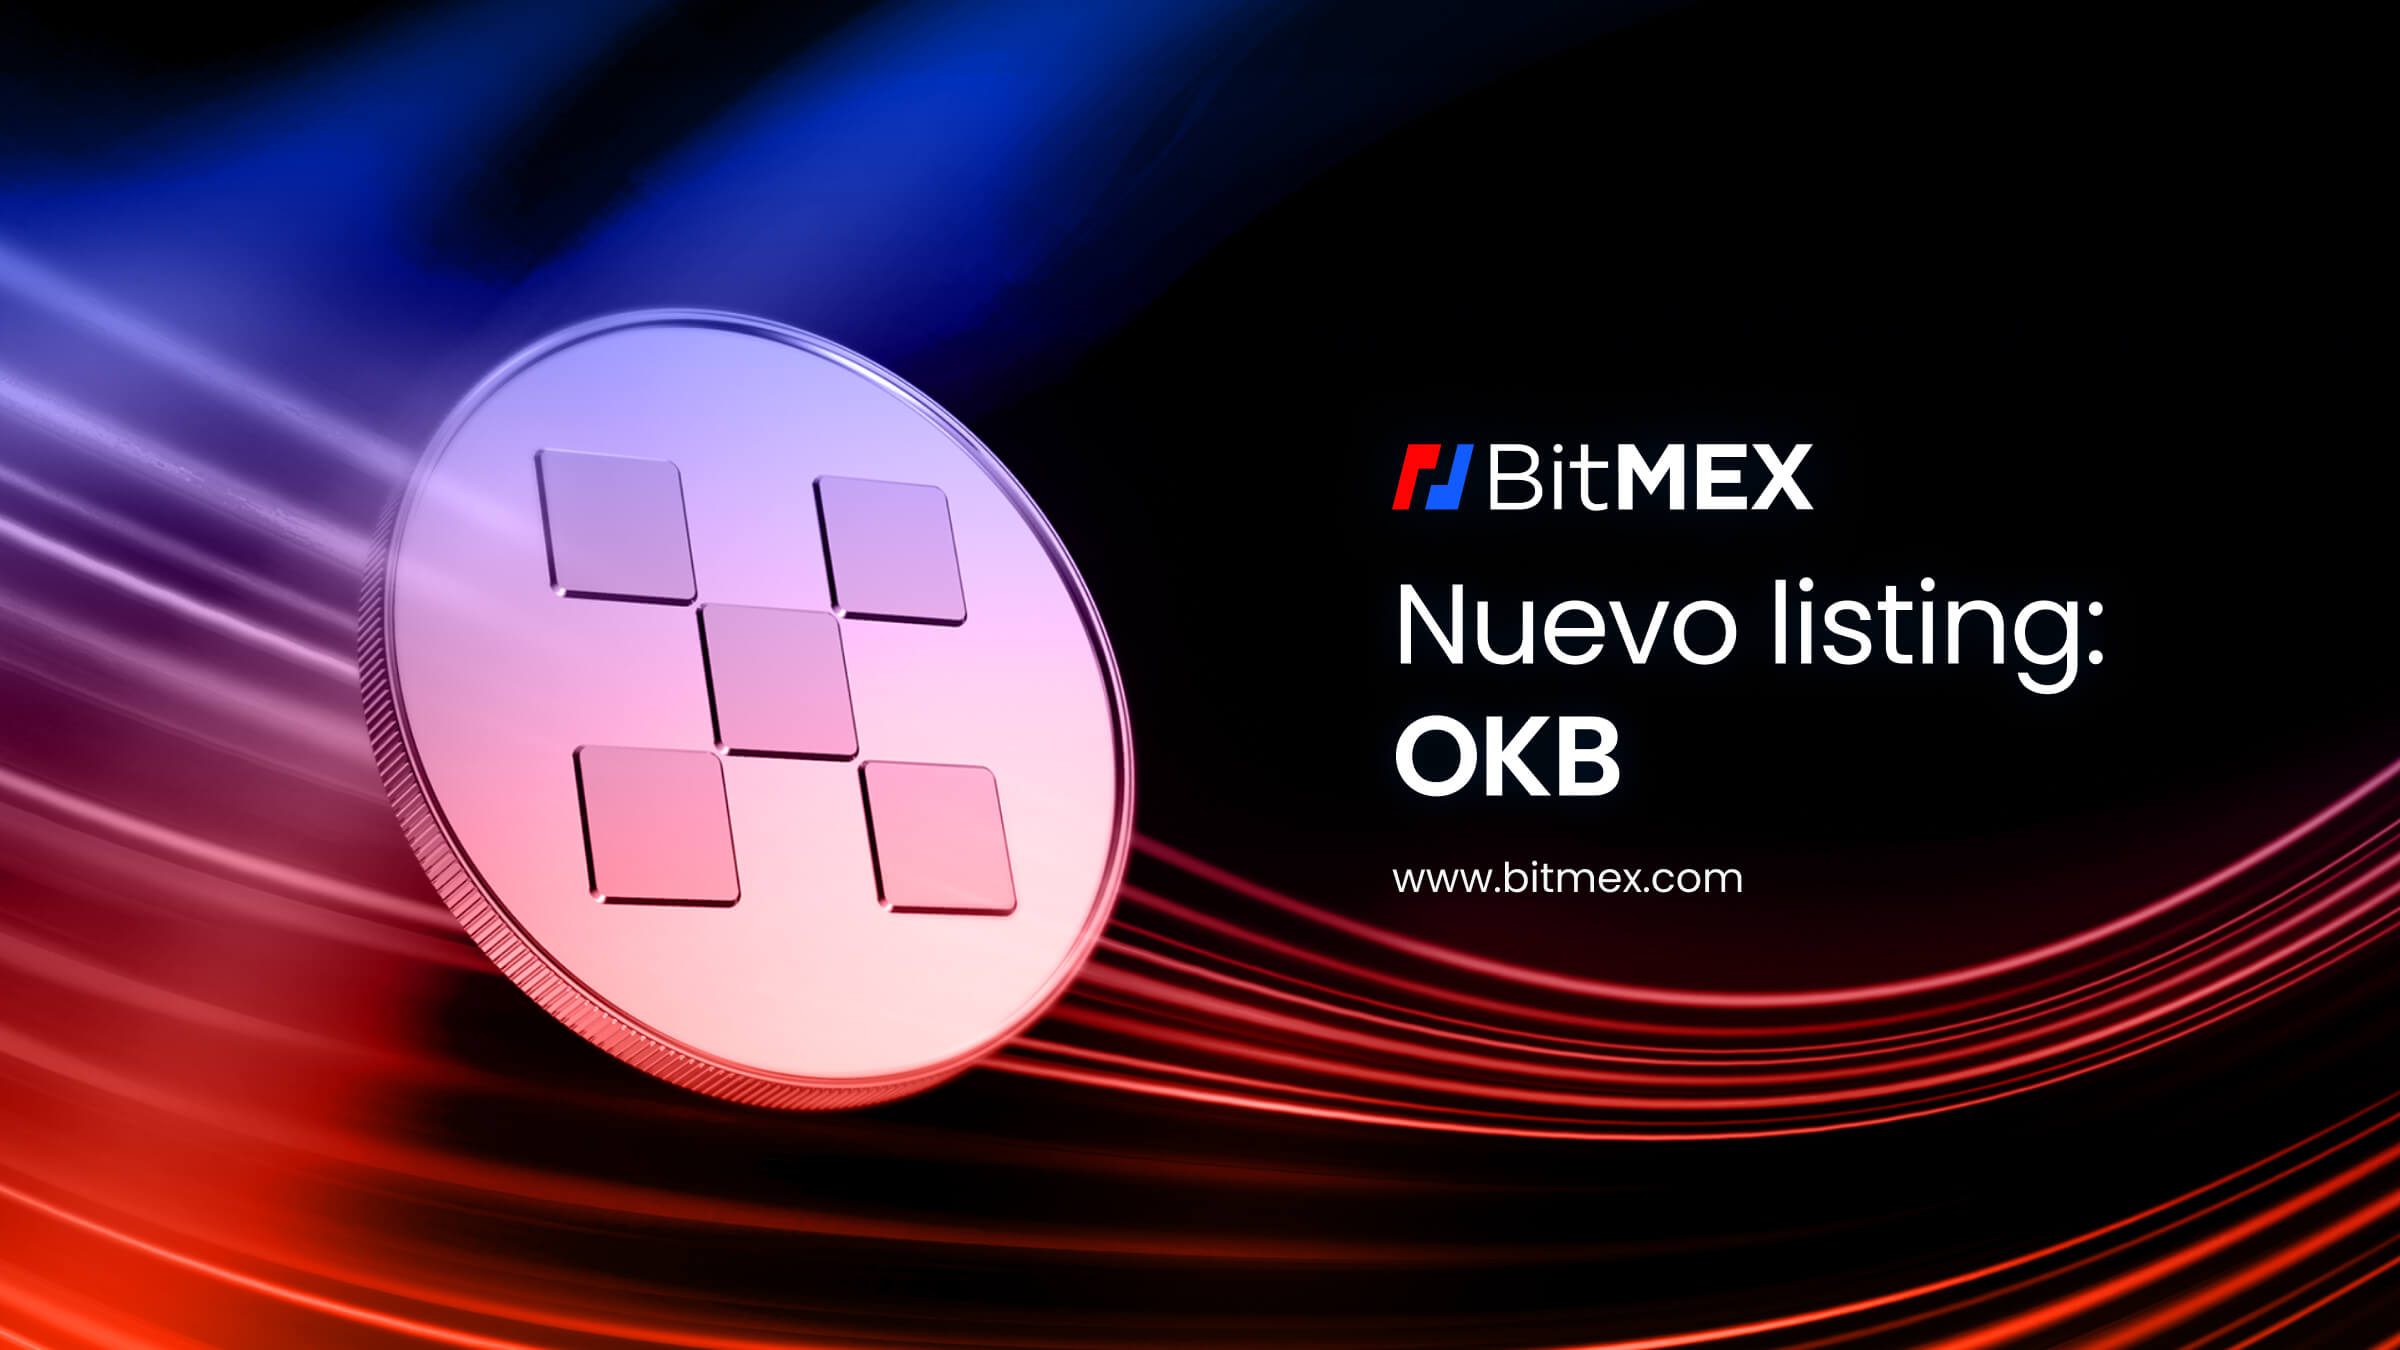 OKB Nuevo Listing